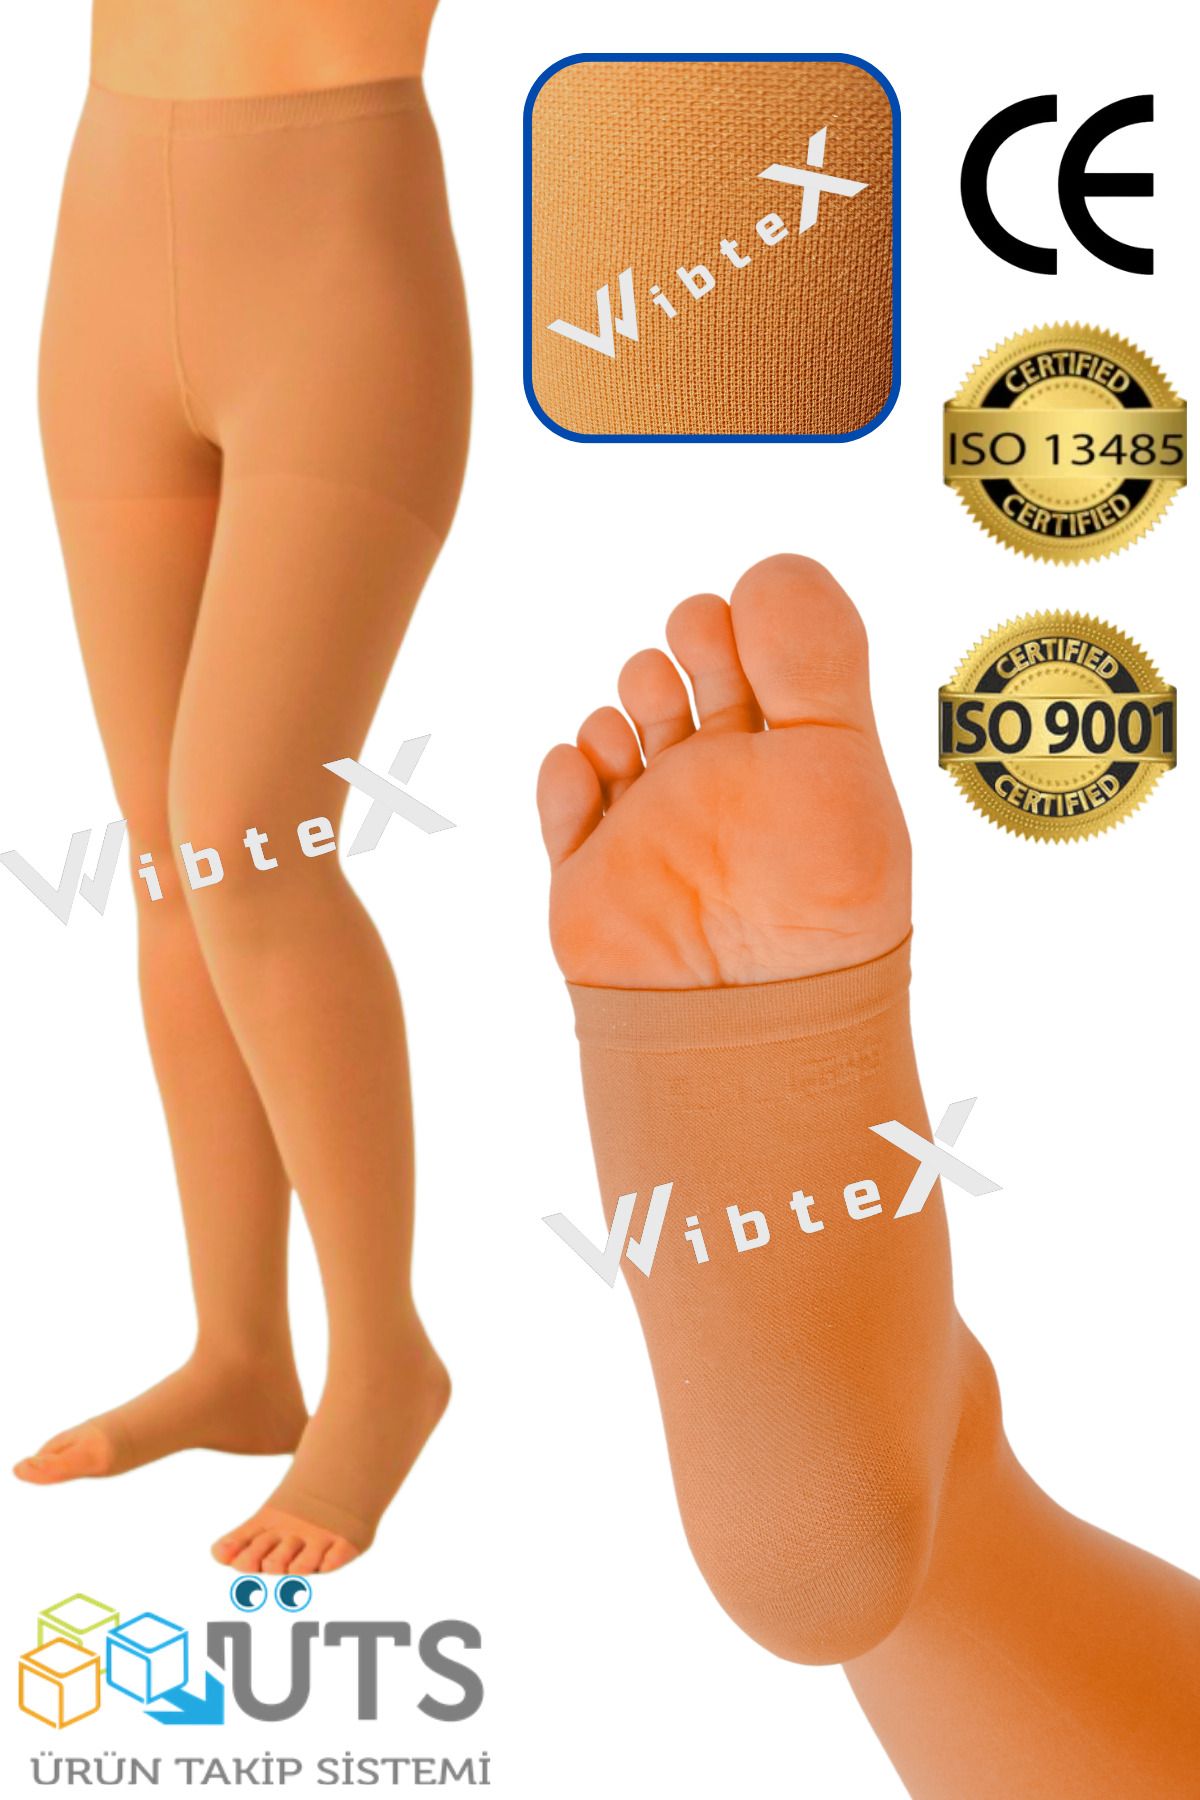 wibtex Külotlu Variss Çorabı Burnu Açık (TEN RENGİ) Orta Basınç Ccl2(ÇİFT BACAK)